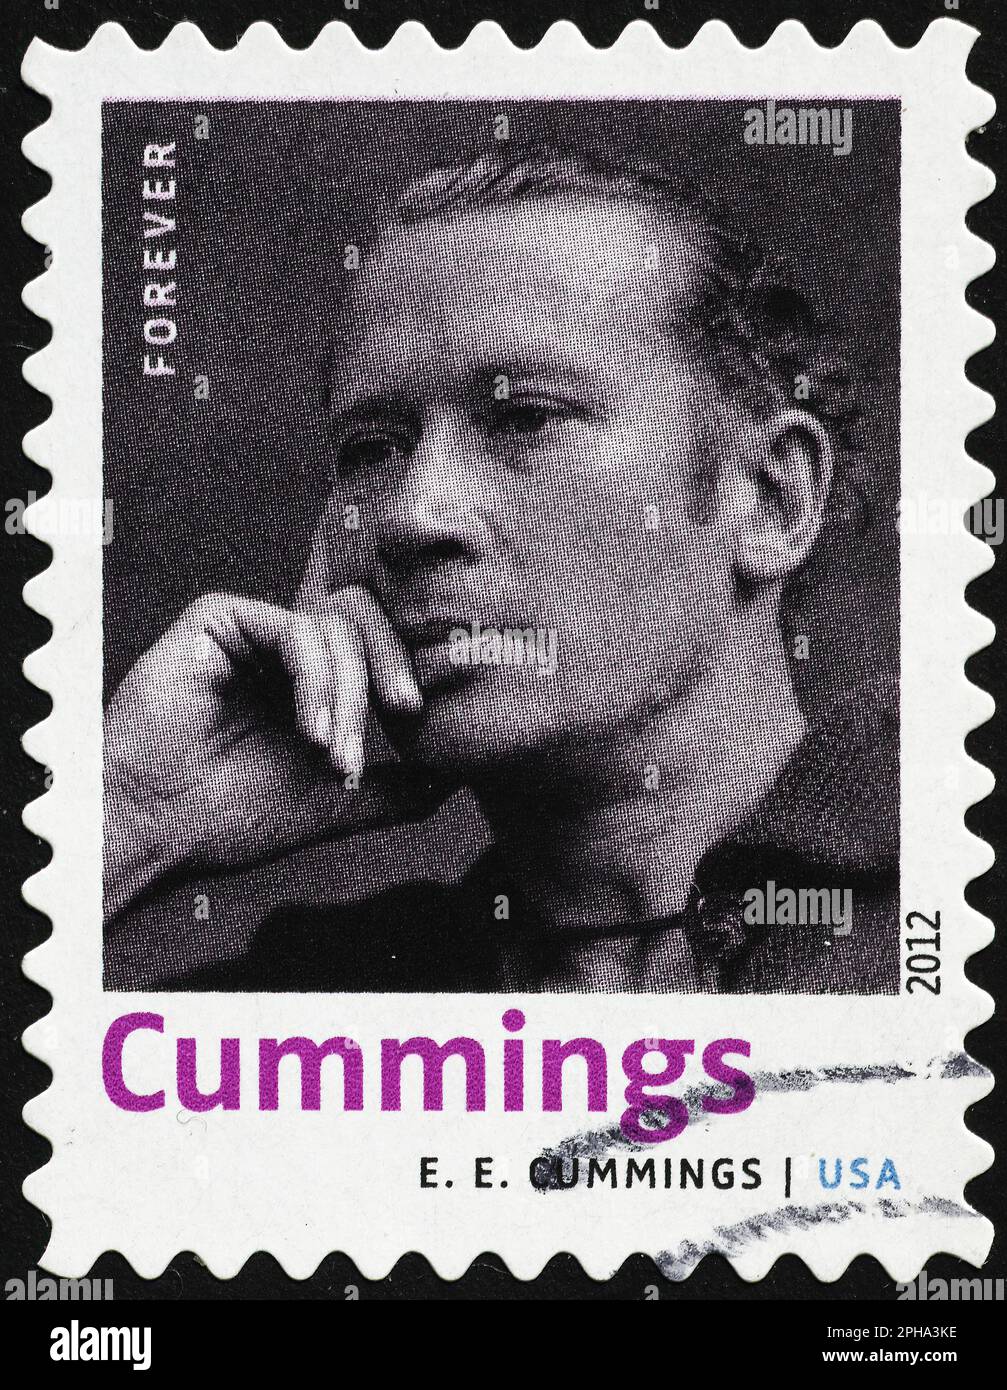 E. E. Cummings auf amerikanischer Briefmarke Stockfoto